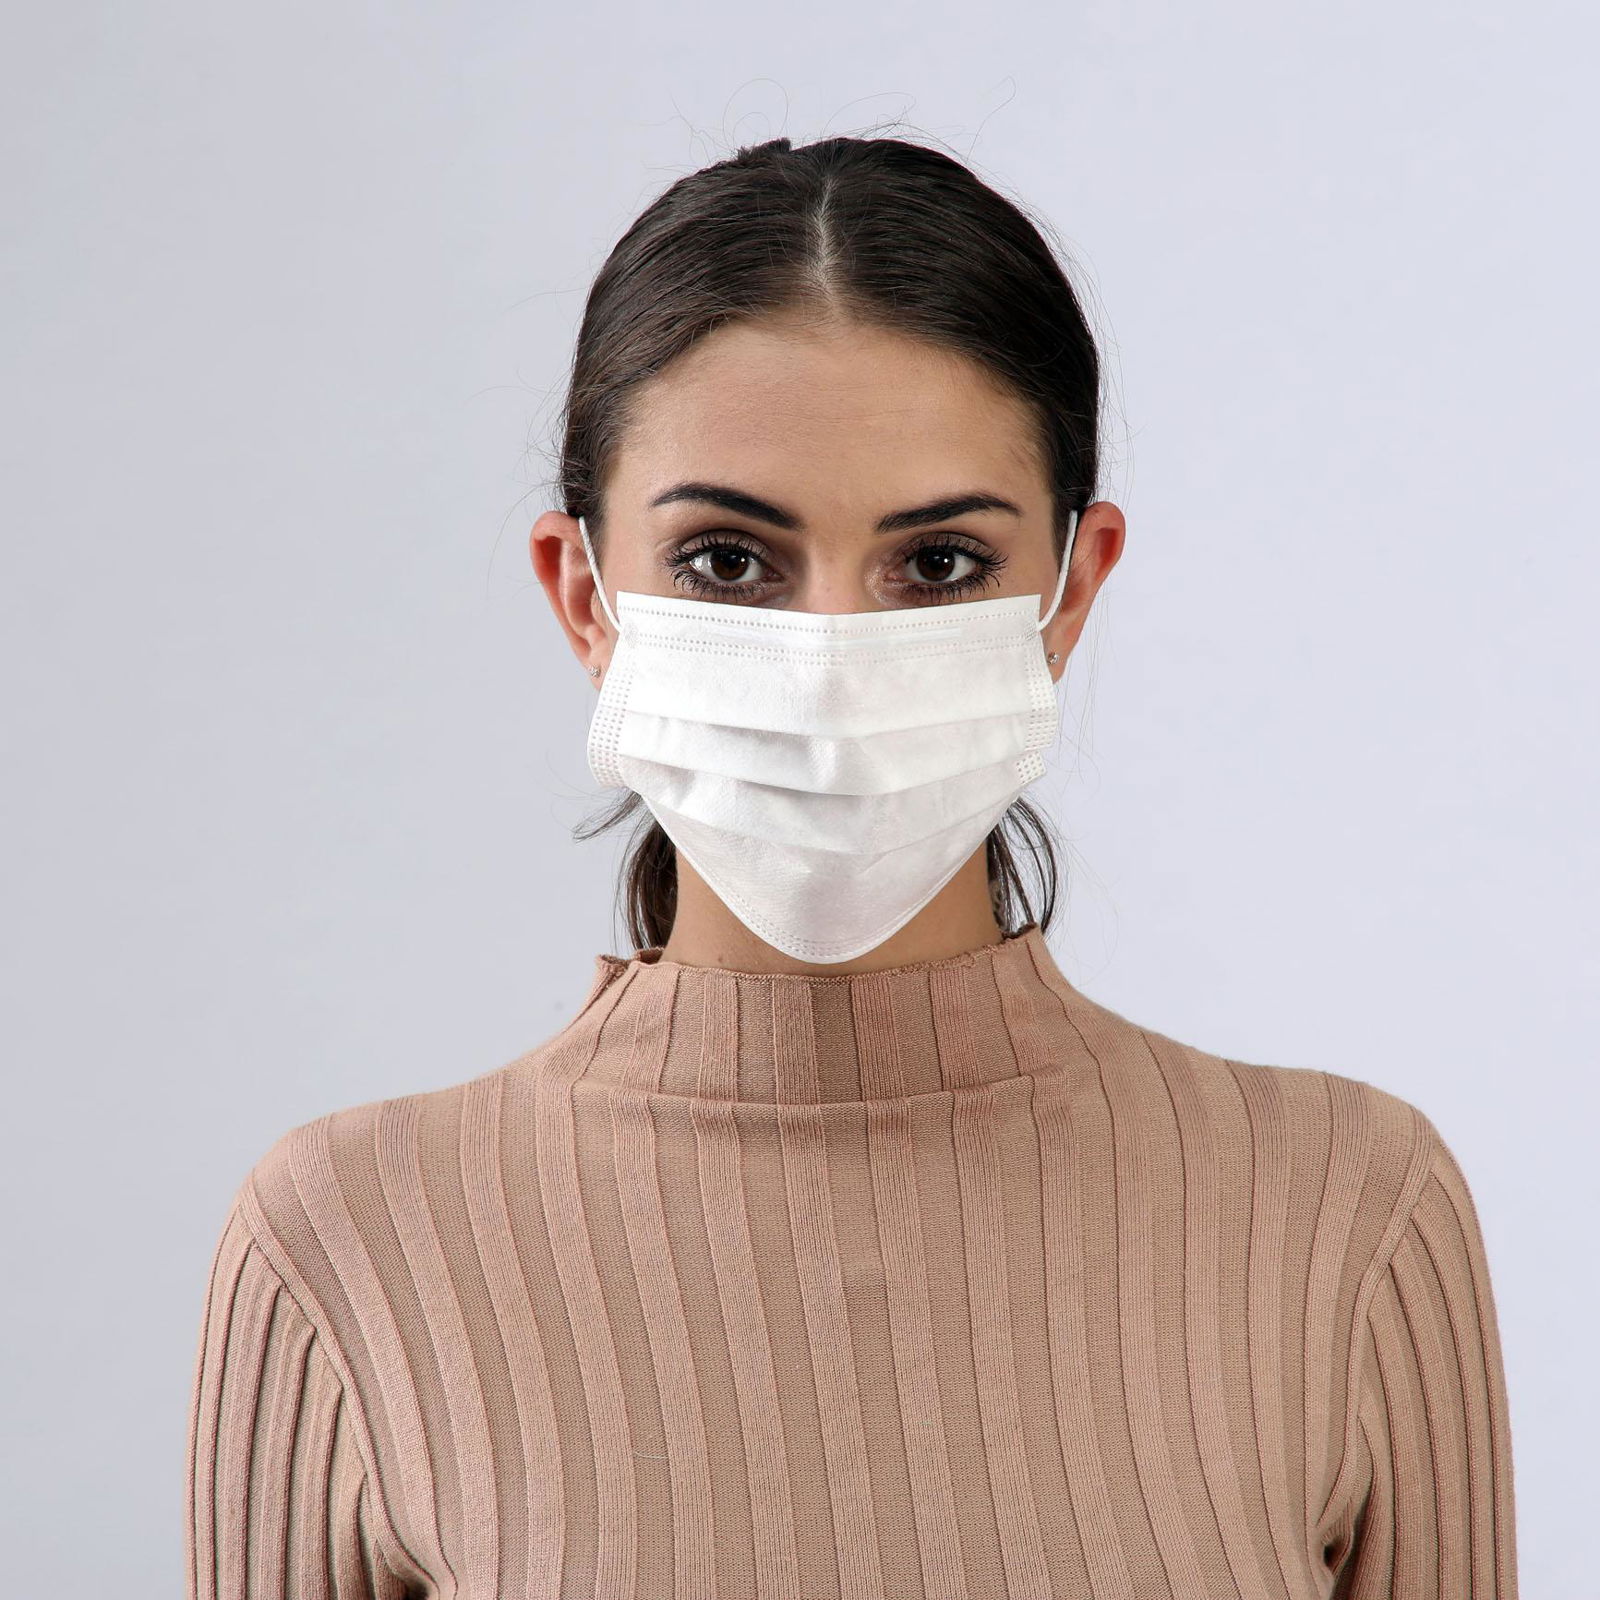 Black Medical Disposable Face Mask N95 Surgical Respirator 